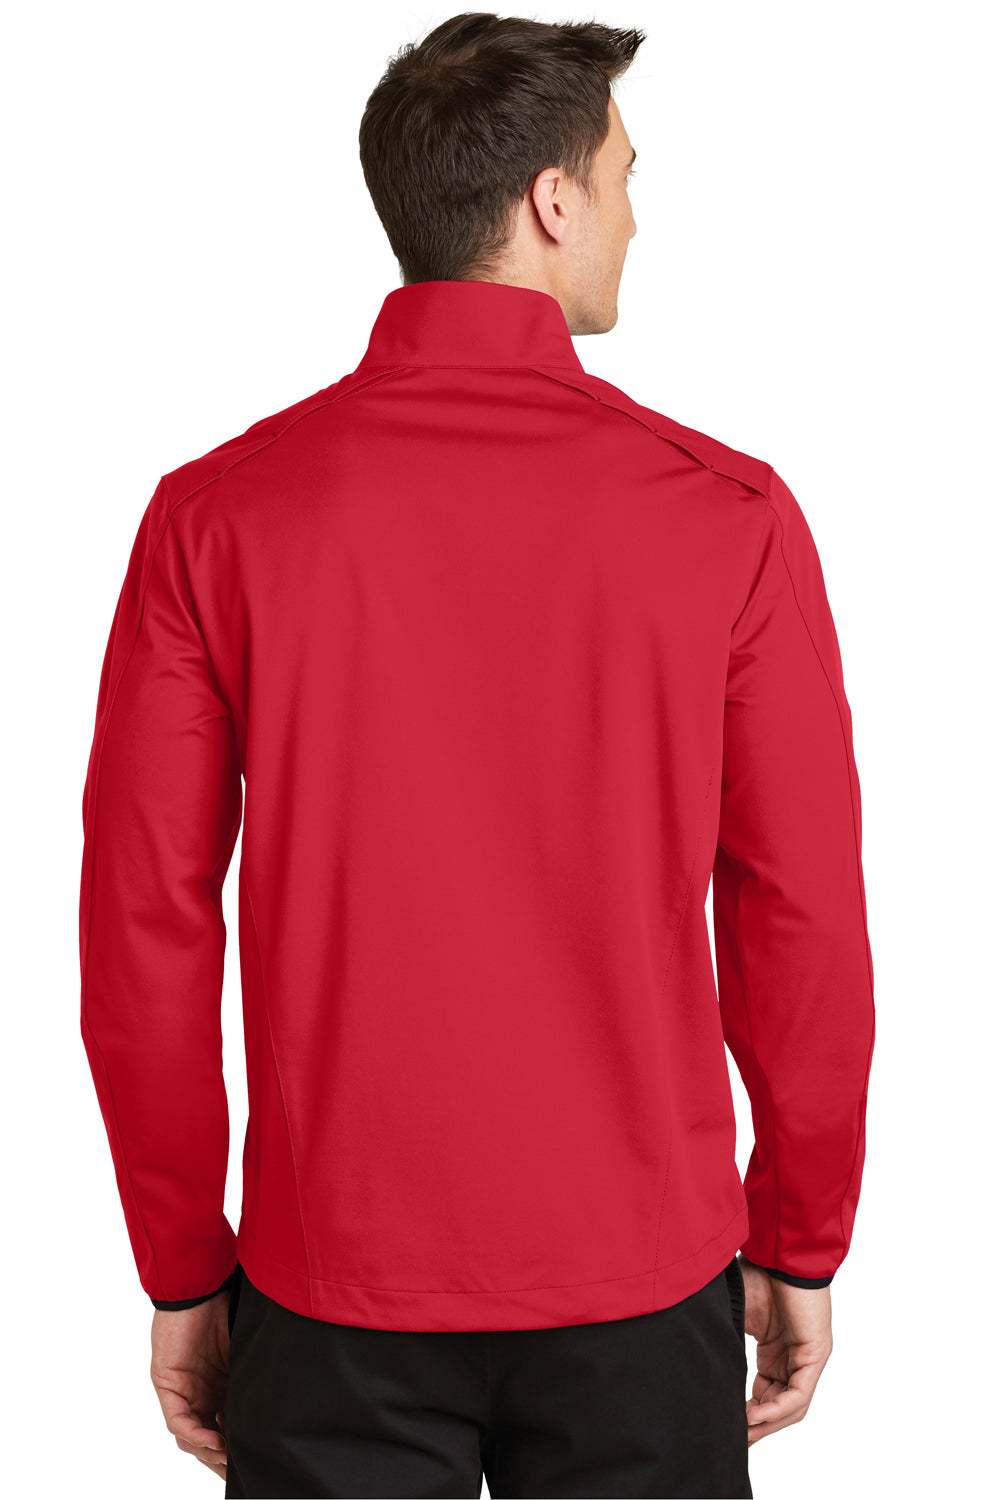 Port Authority J716 Mens Active Wind & Water Resistant 1/4 Zip Jacket Red Back